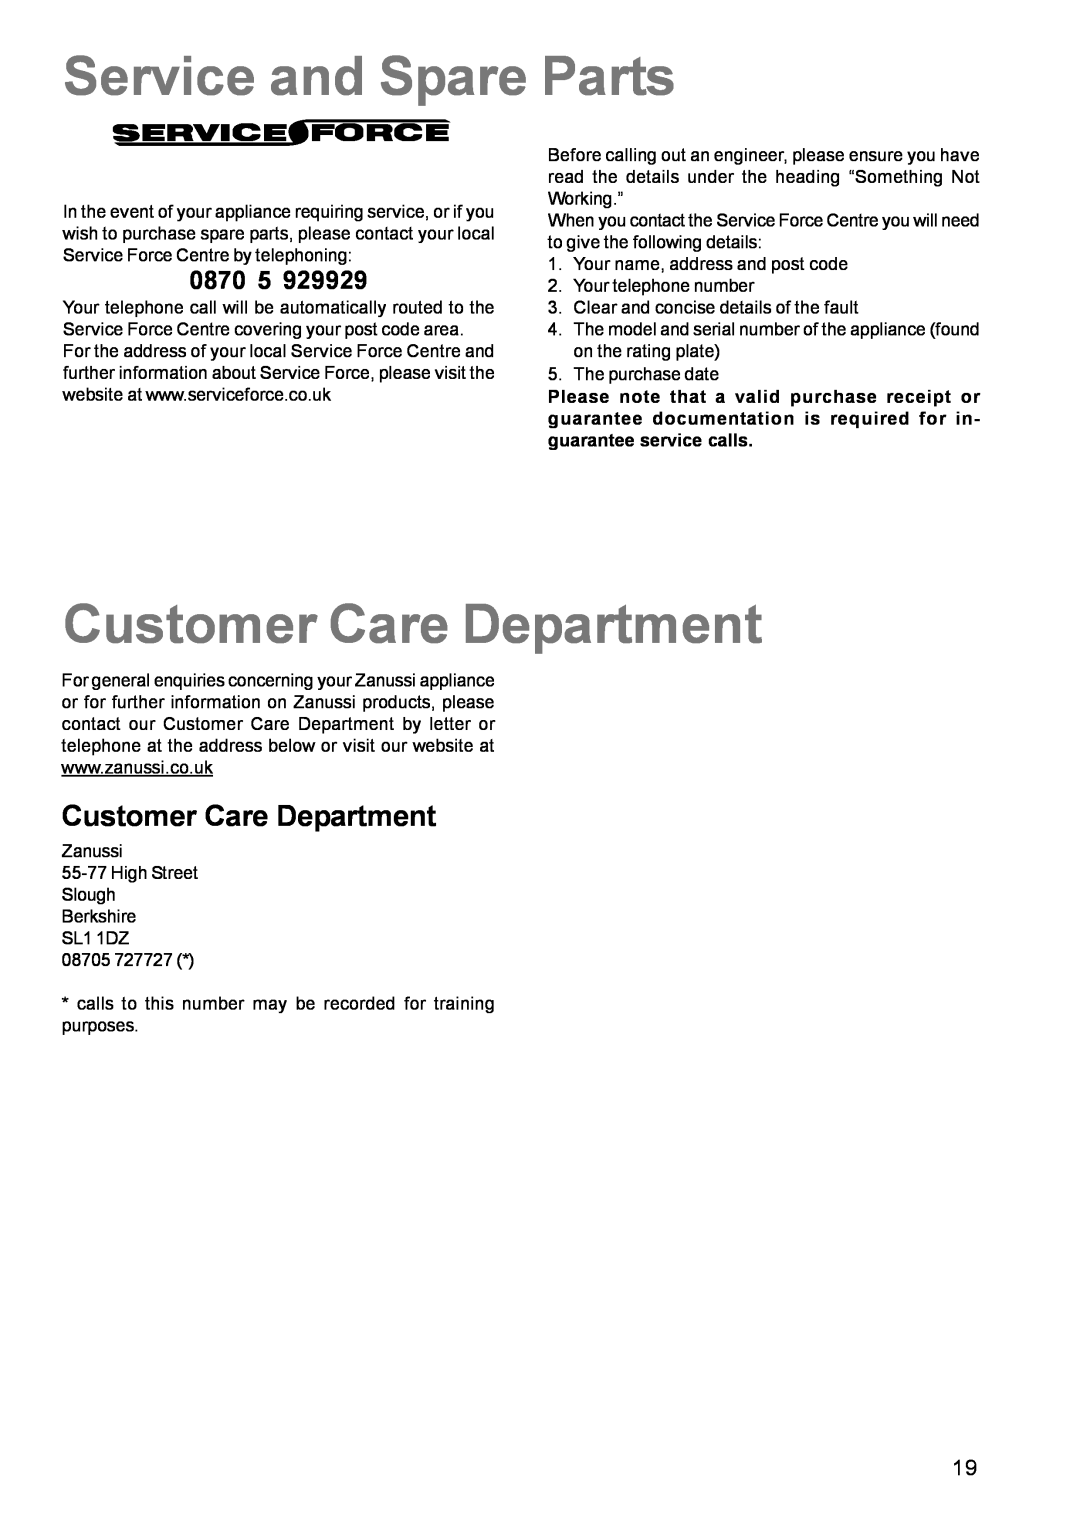 Zanussi ZCE 611 manual Service and Spare Parts, Customer Care Department, 0870 